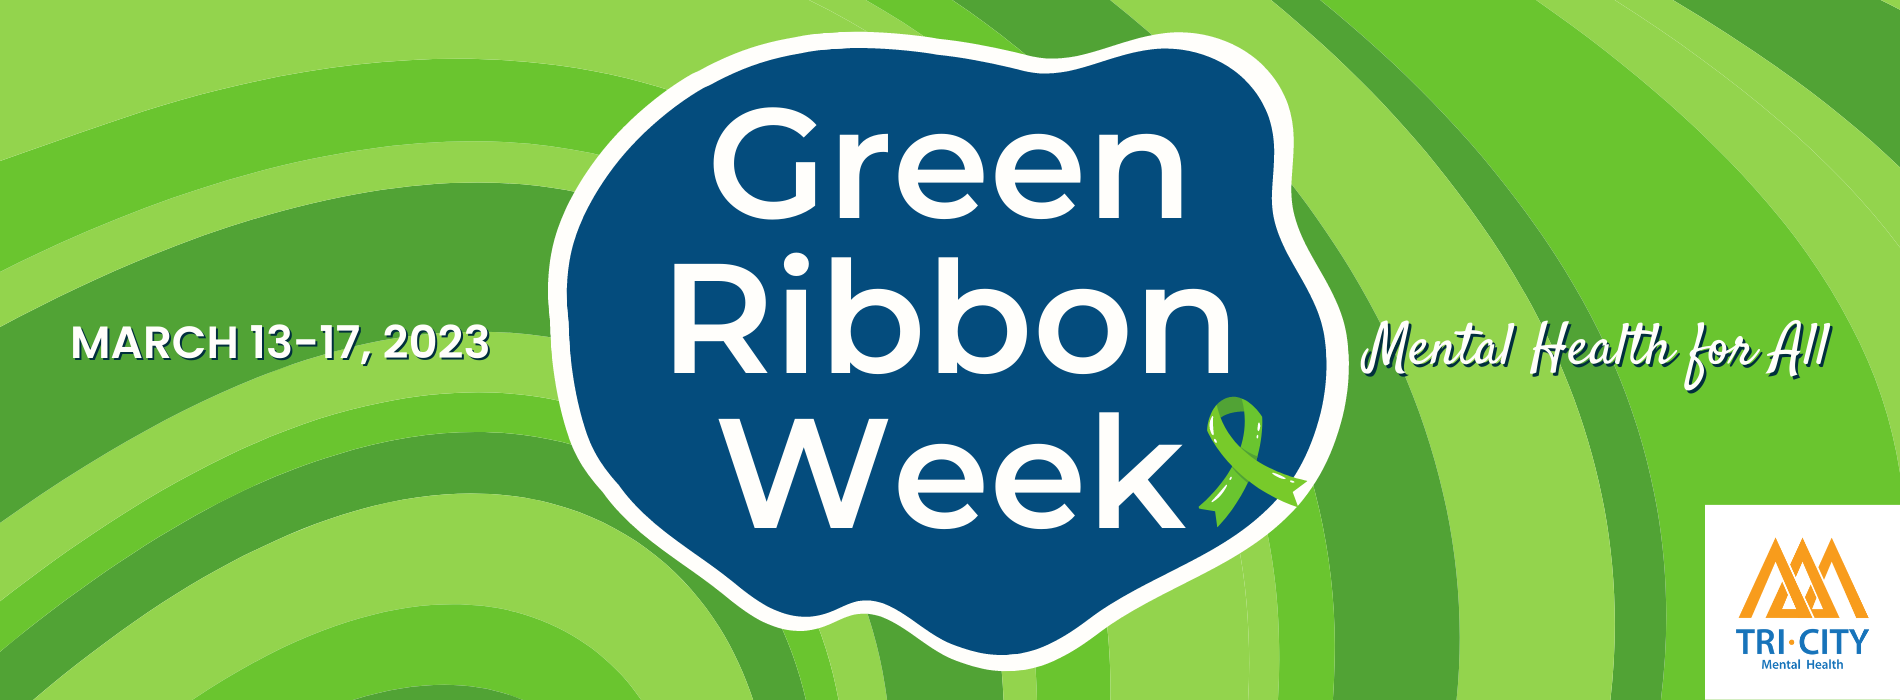 The Green Ribbon - Wellness Wednesday